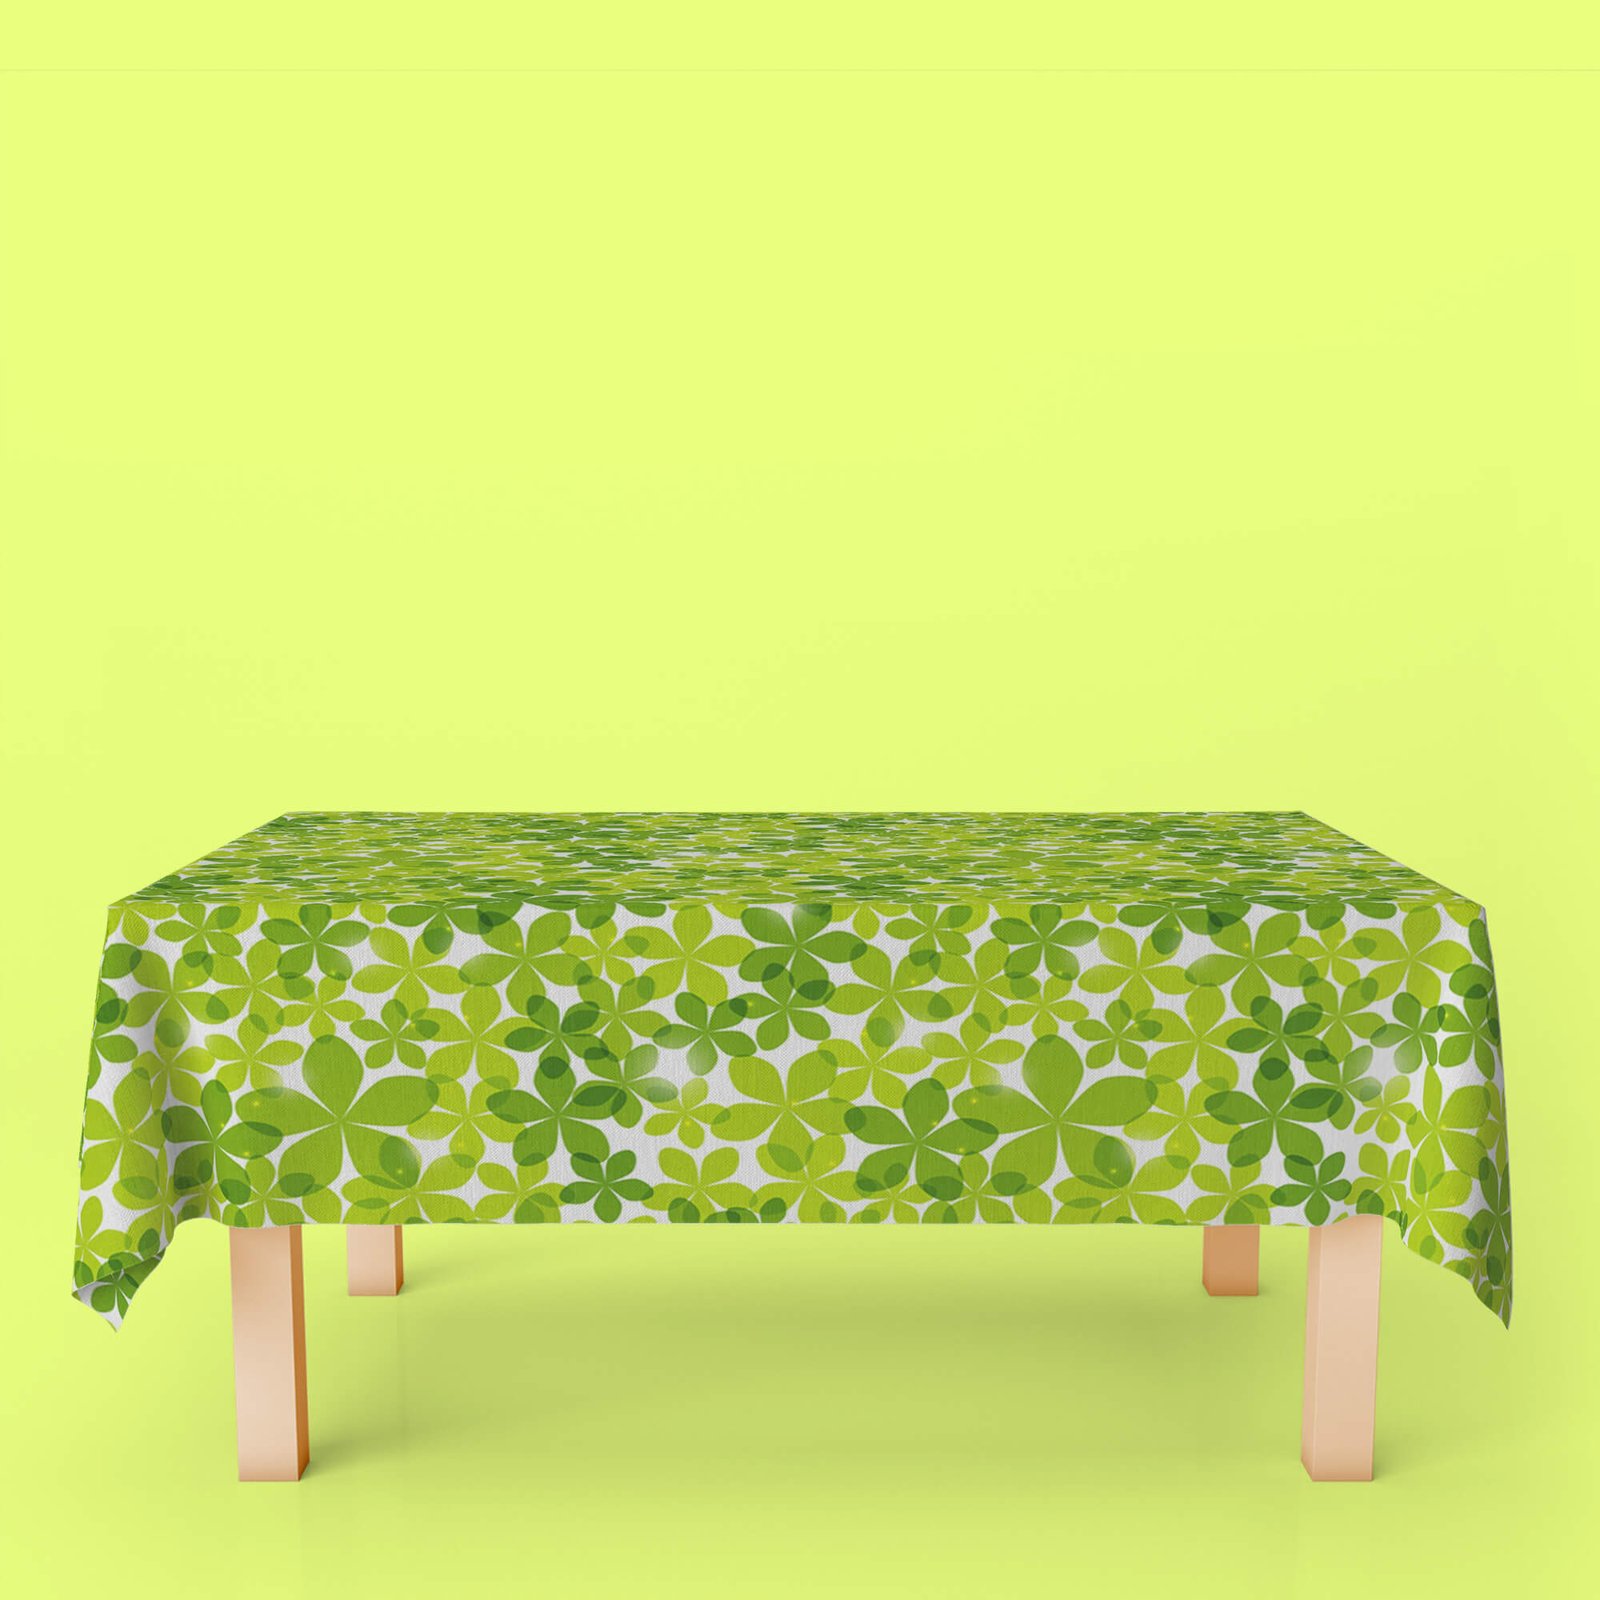 Design Free Table Cloth Mockup PSD Template